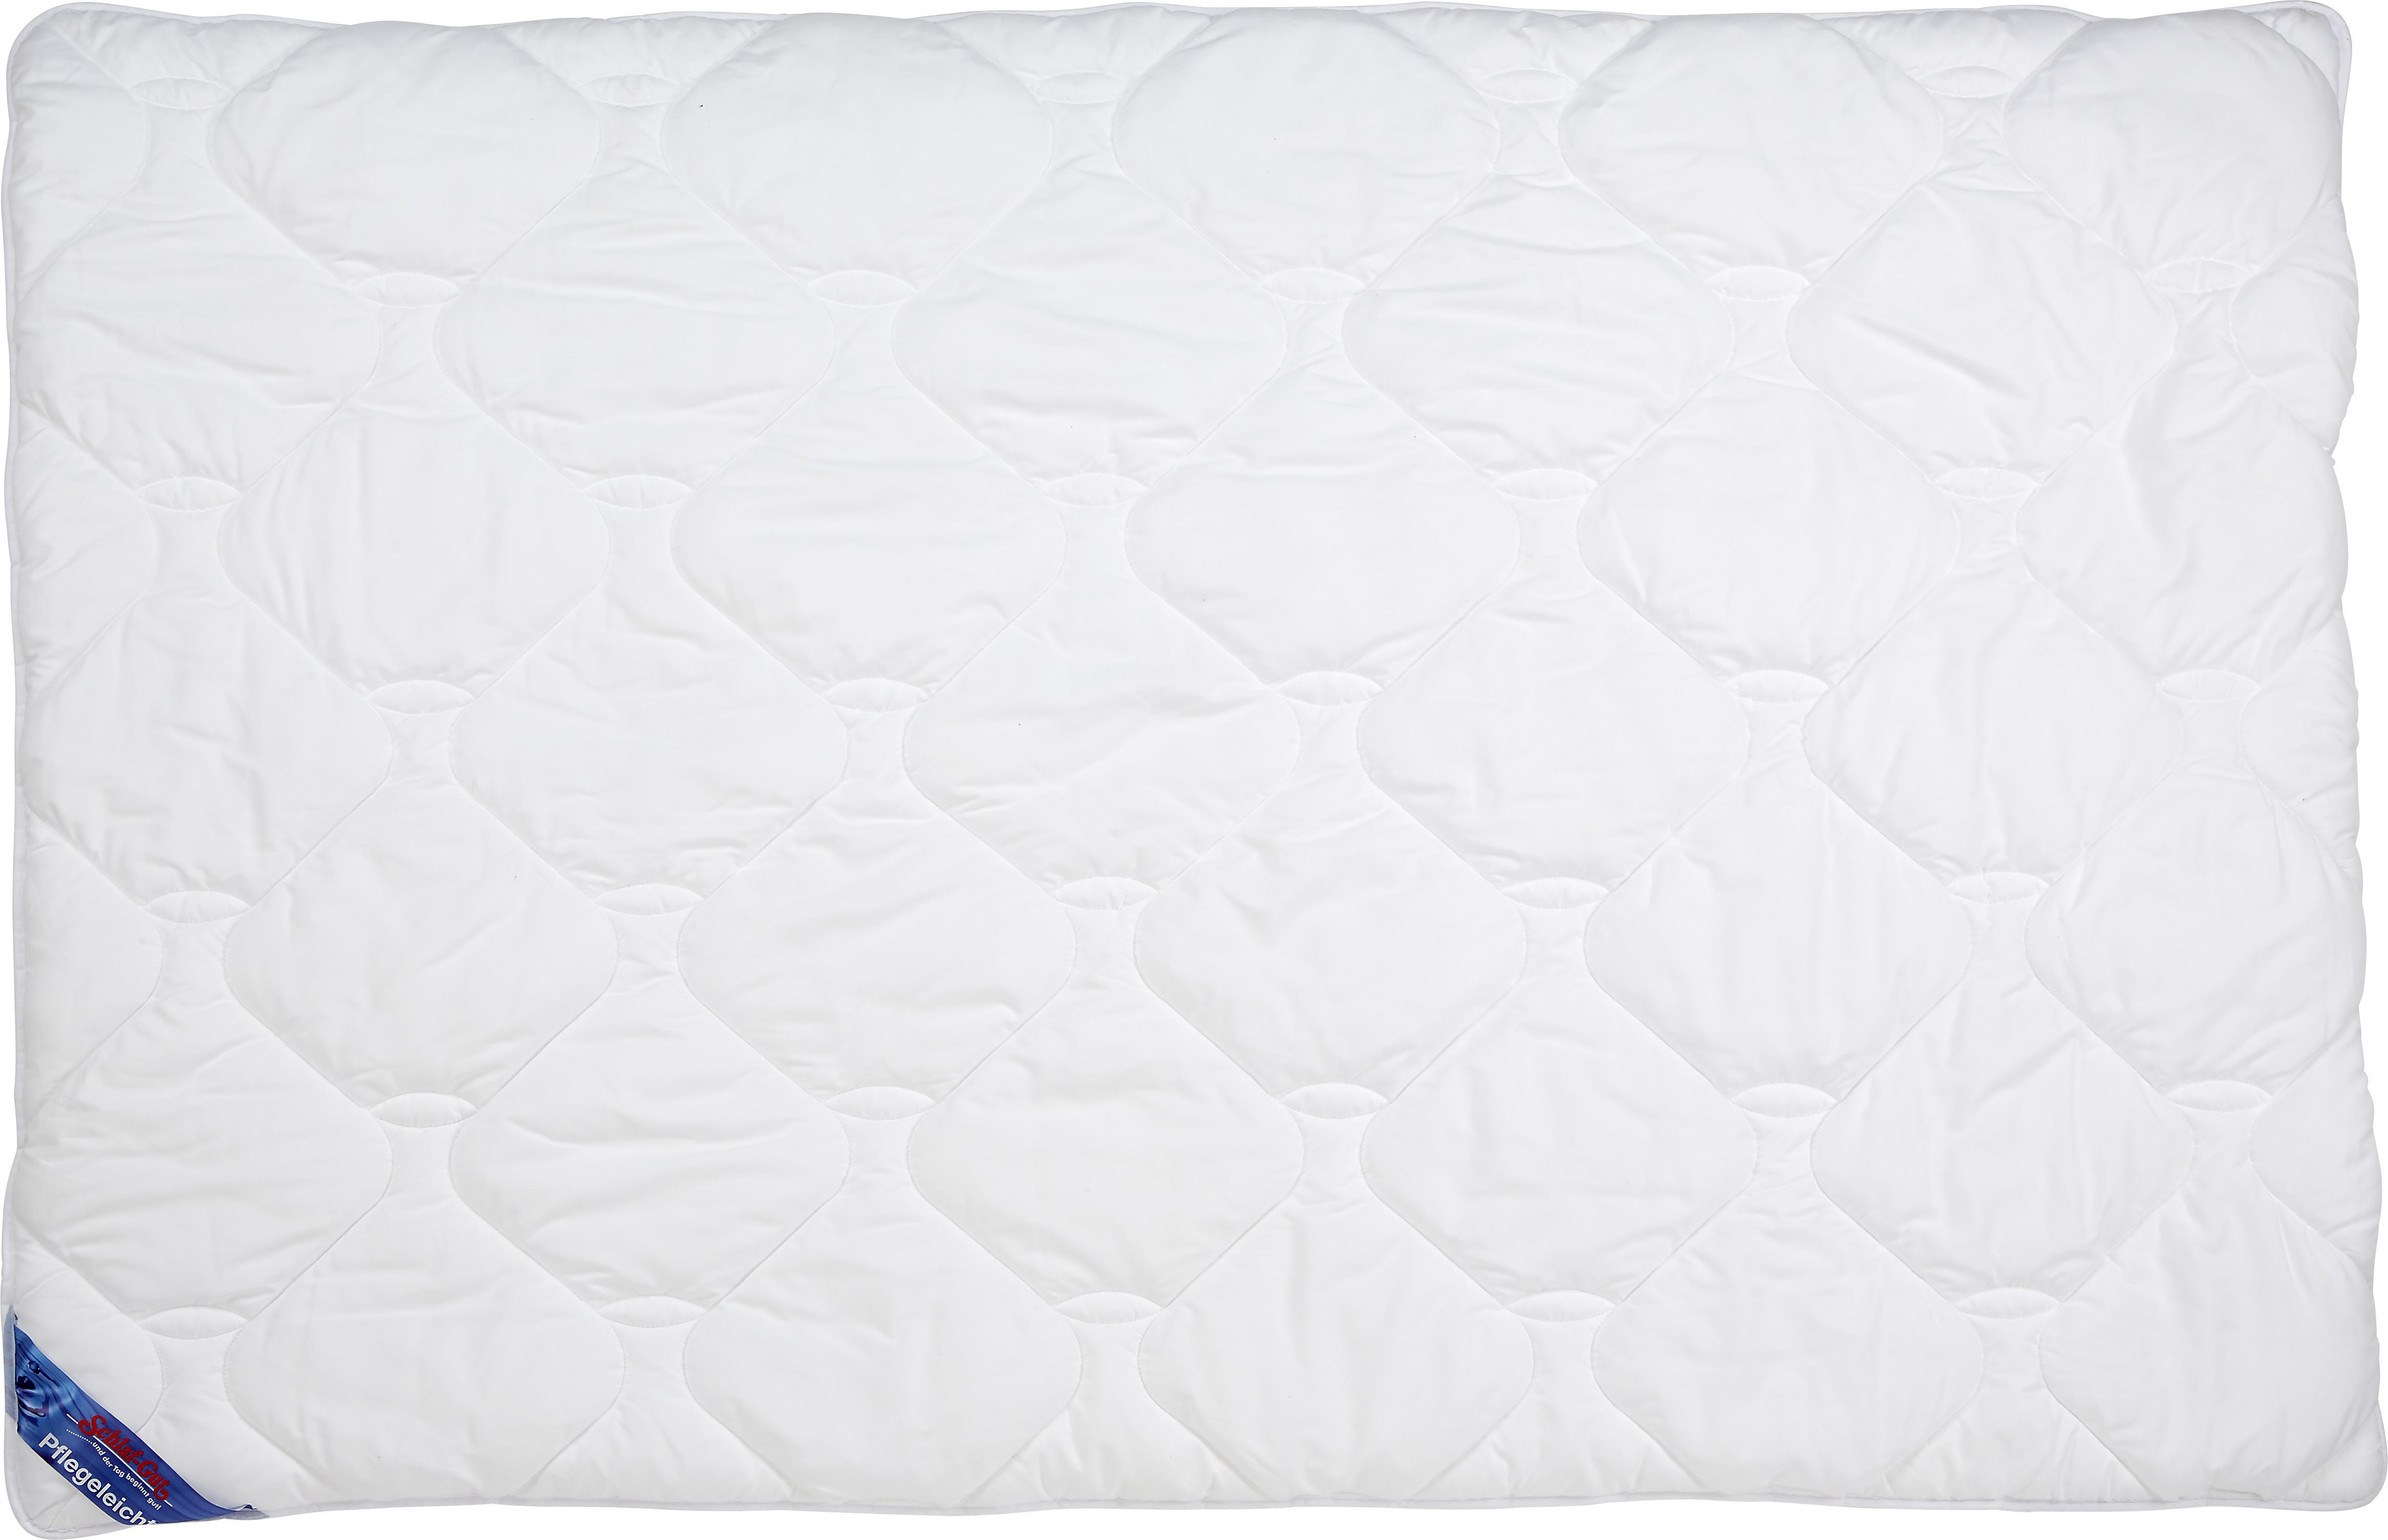 Steppdecke Frankenstolz Warm Polyester/Tencel 140/200 cm - Weiß, KONVENTIONELL, Textil (140/200cm) - FAN